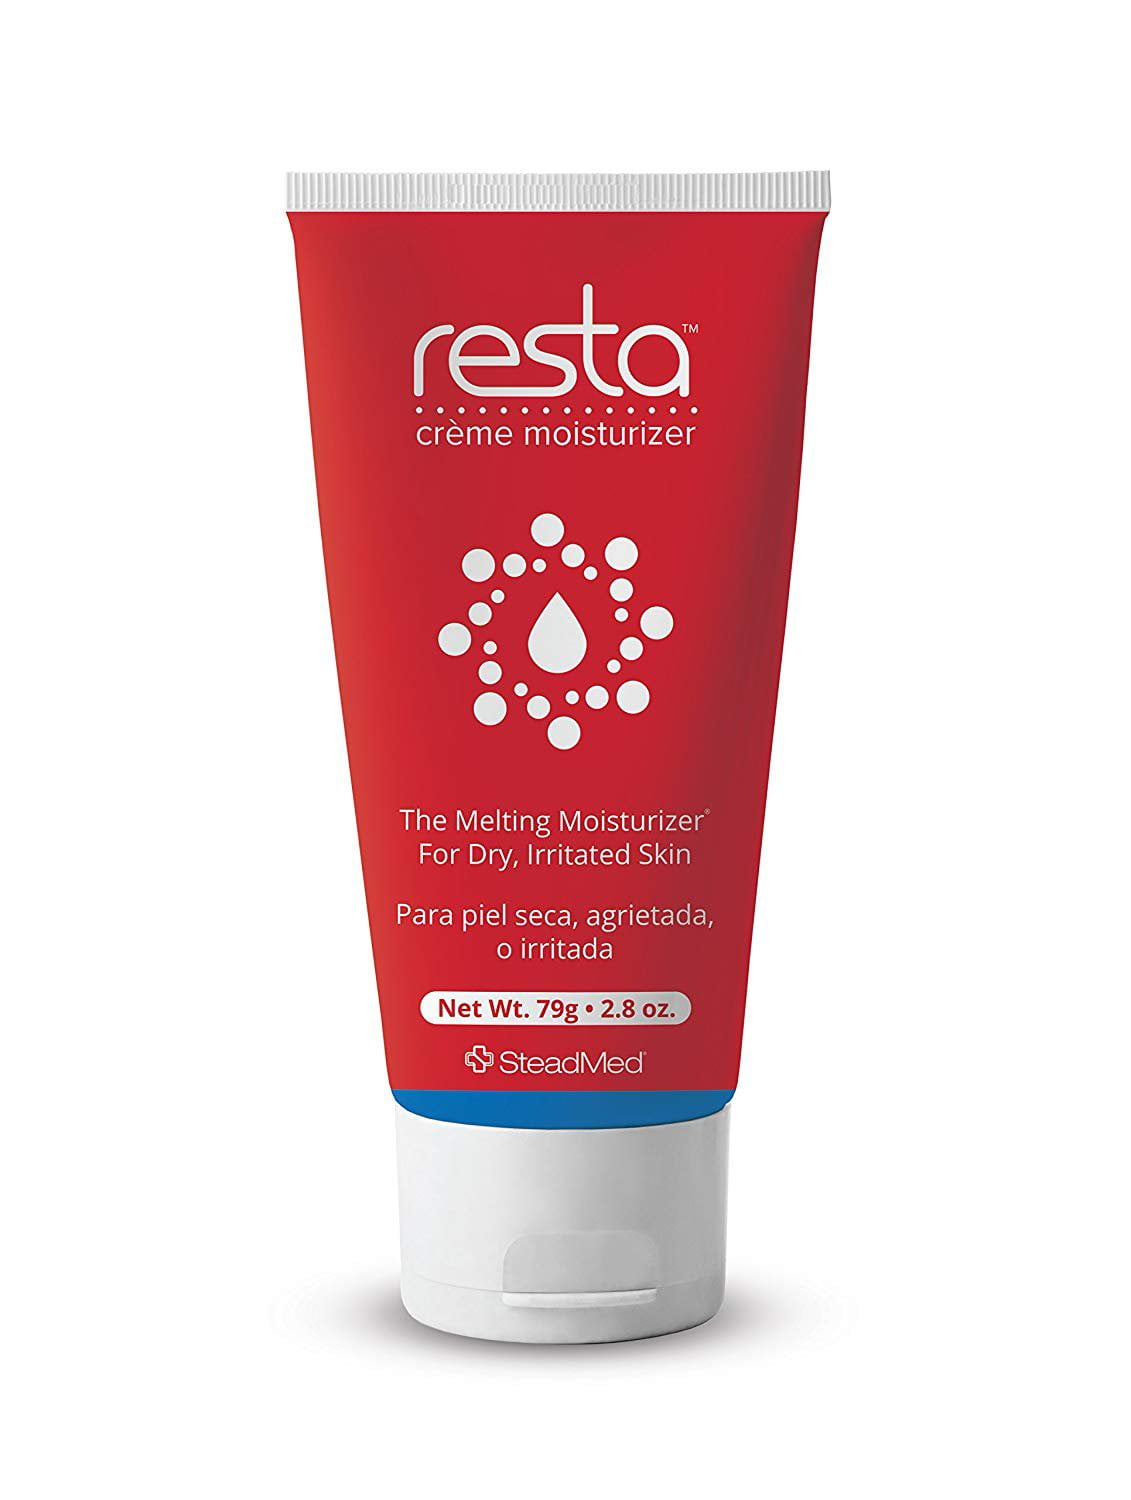 Buy Resta Crème Moisturizer 2.8 oz Tube at Walmart.com. 